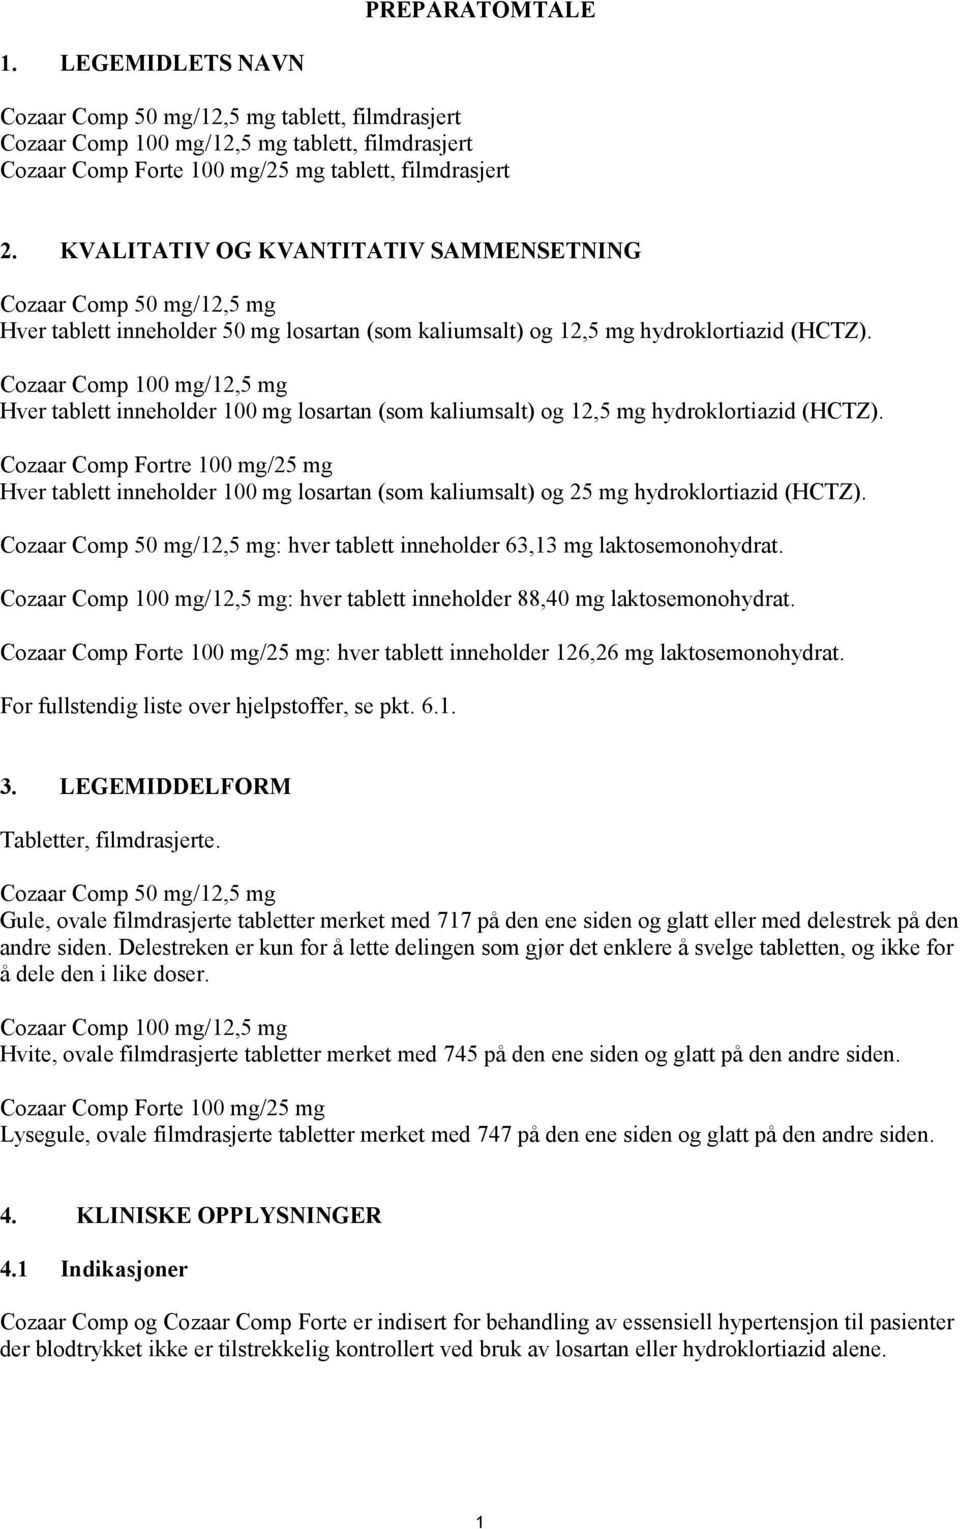 Cozaar Comp 100 mg/12,5 mg Hver tablett inneholder 100 mg losartan (som kaliumsalt) og 12,5 mg hydroklortiazid (HCTZ).